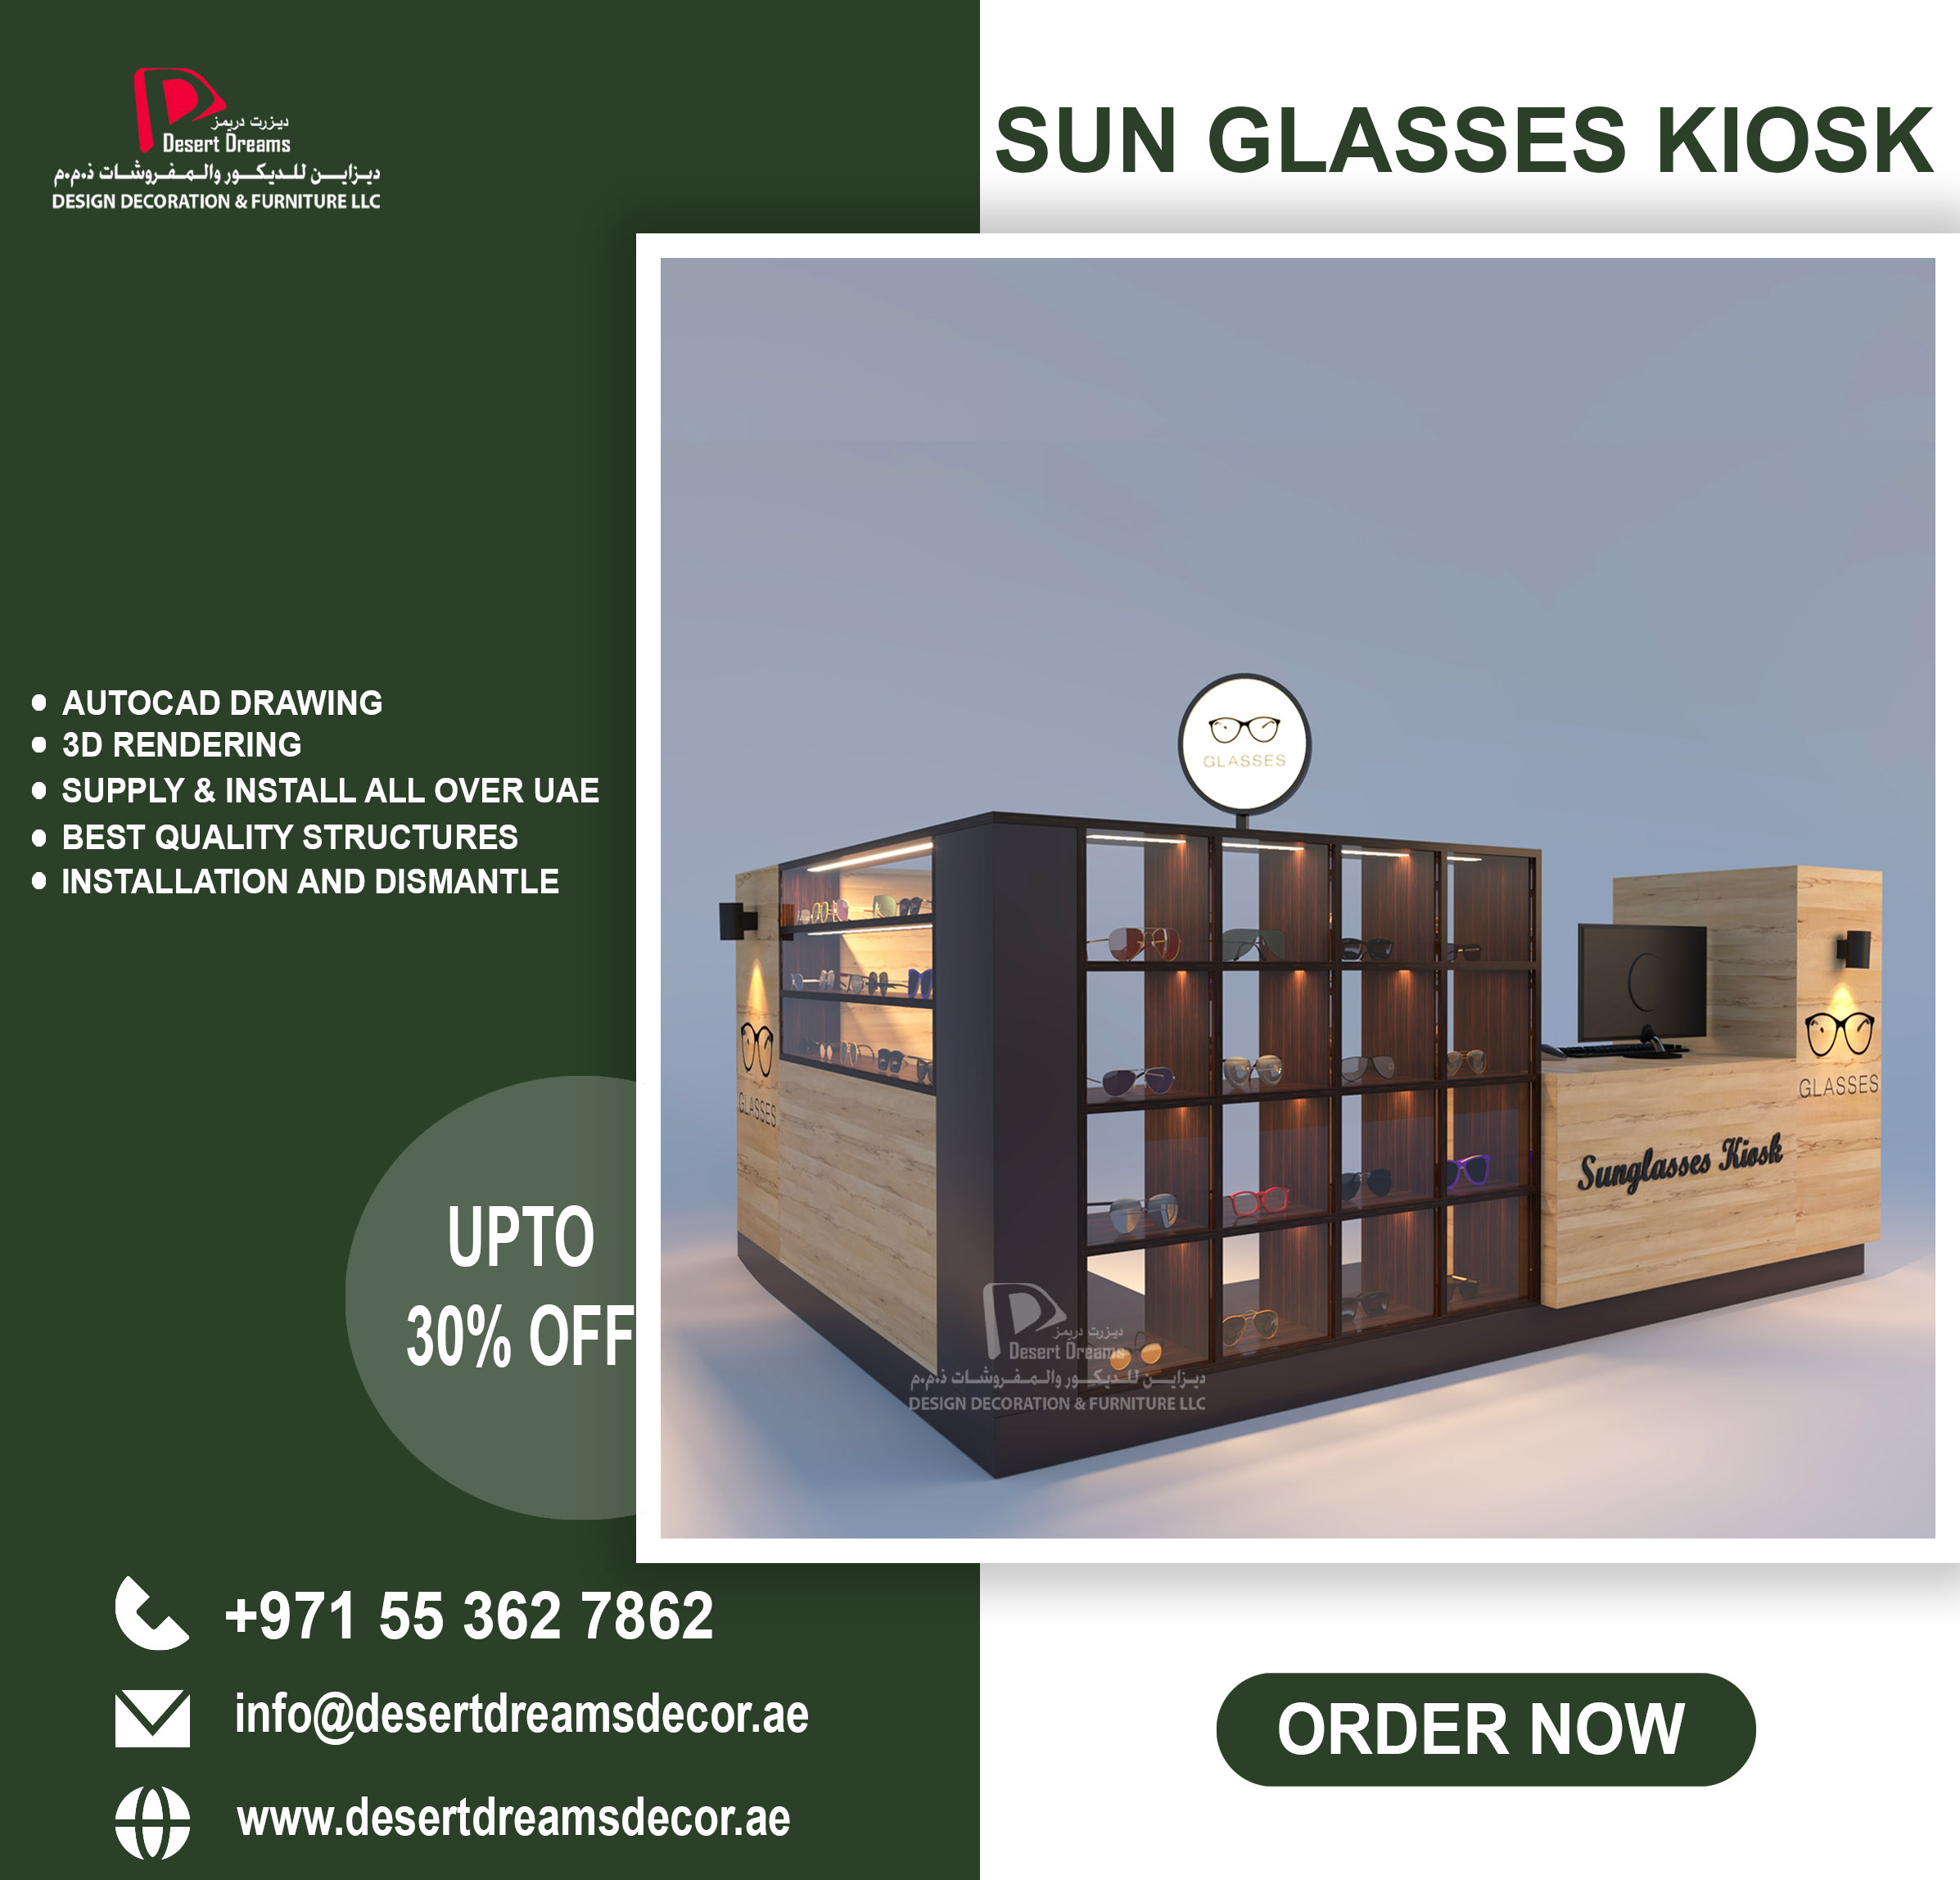 Sun Glasses Kiosk Uae | Perfume Kiosk | Kiosk Rendering in Uae.